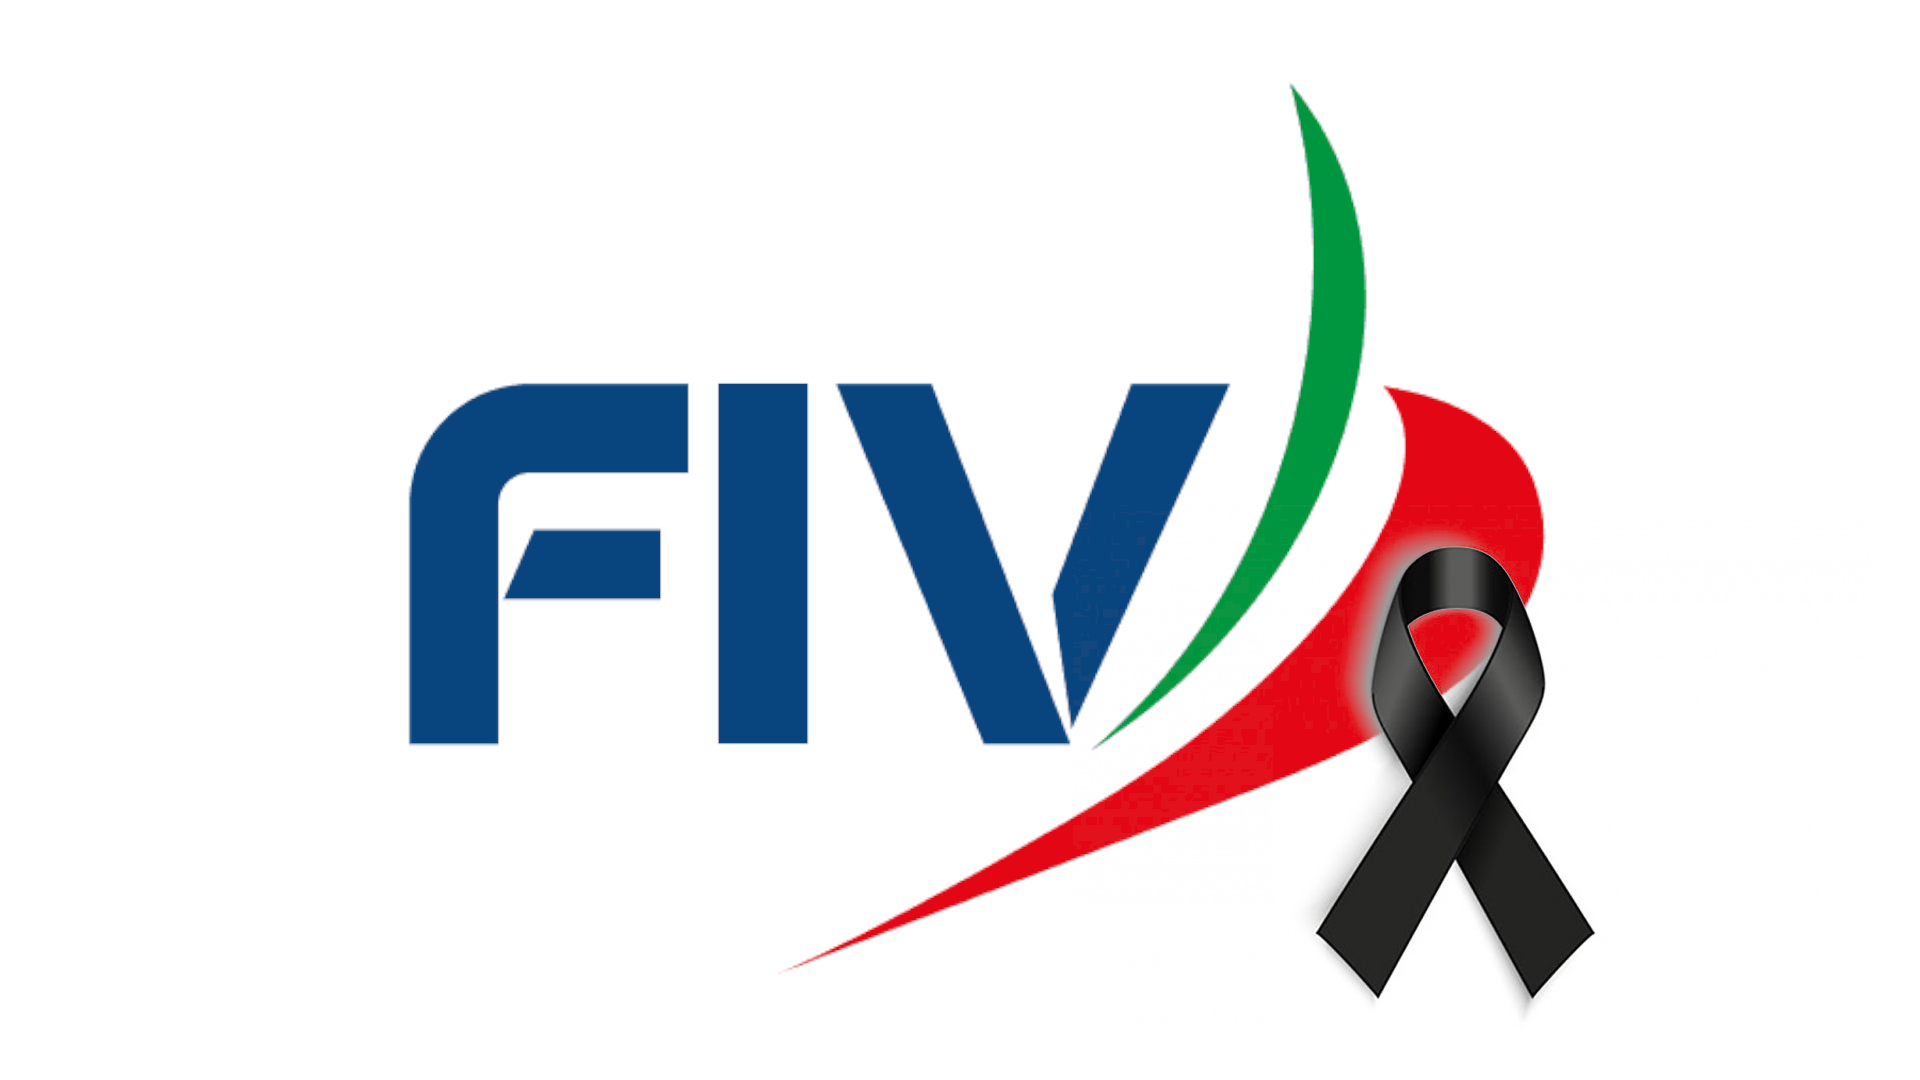 images/fiv/logo_fiv_lutto.png